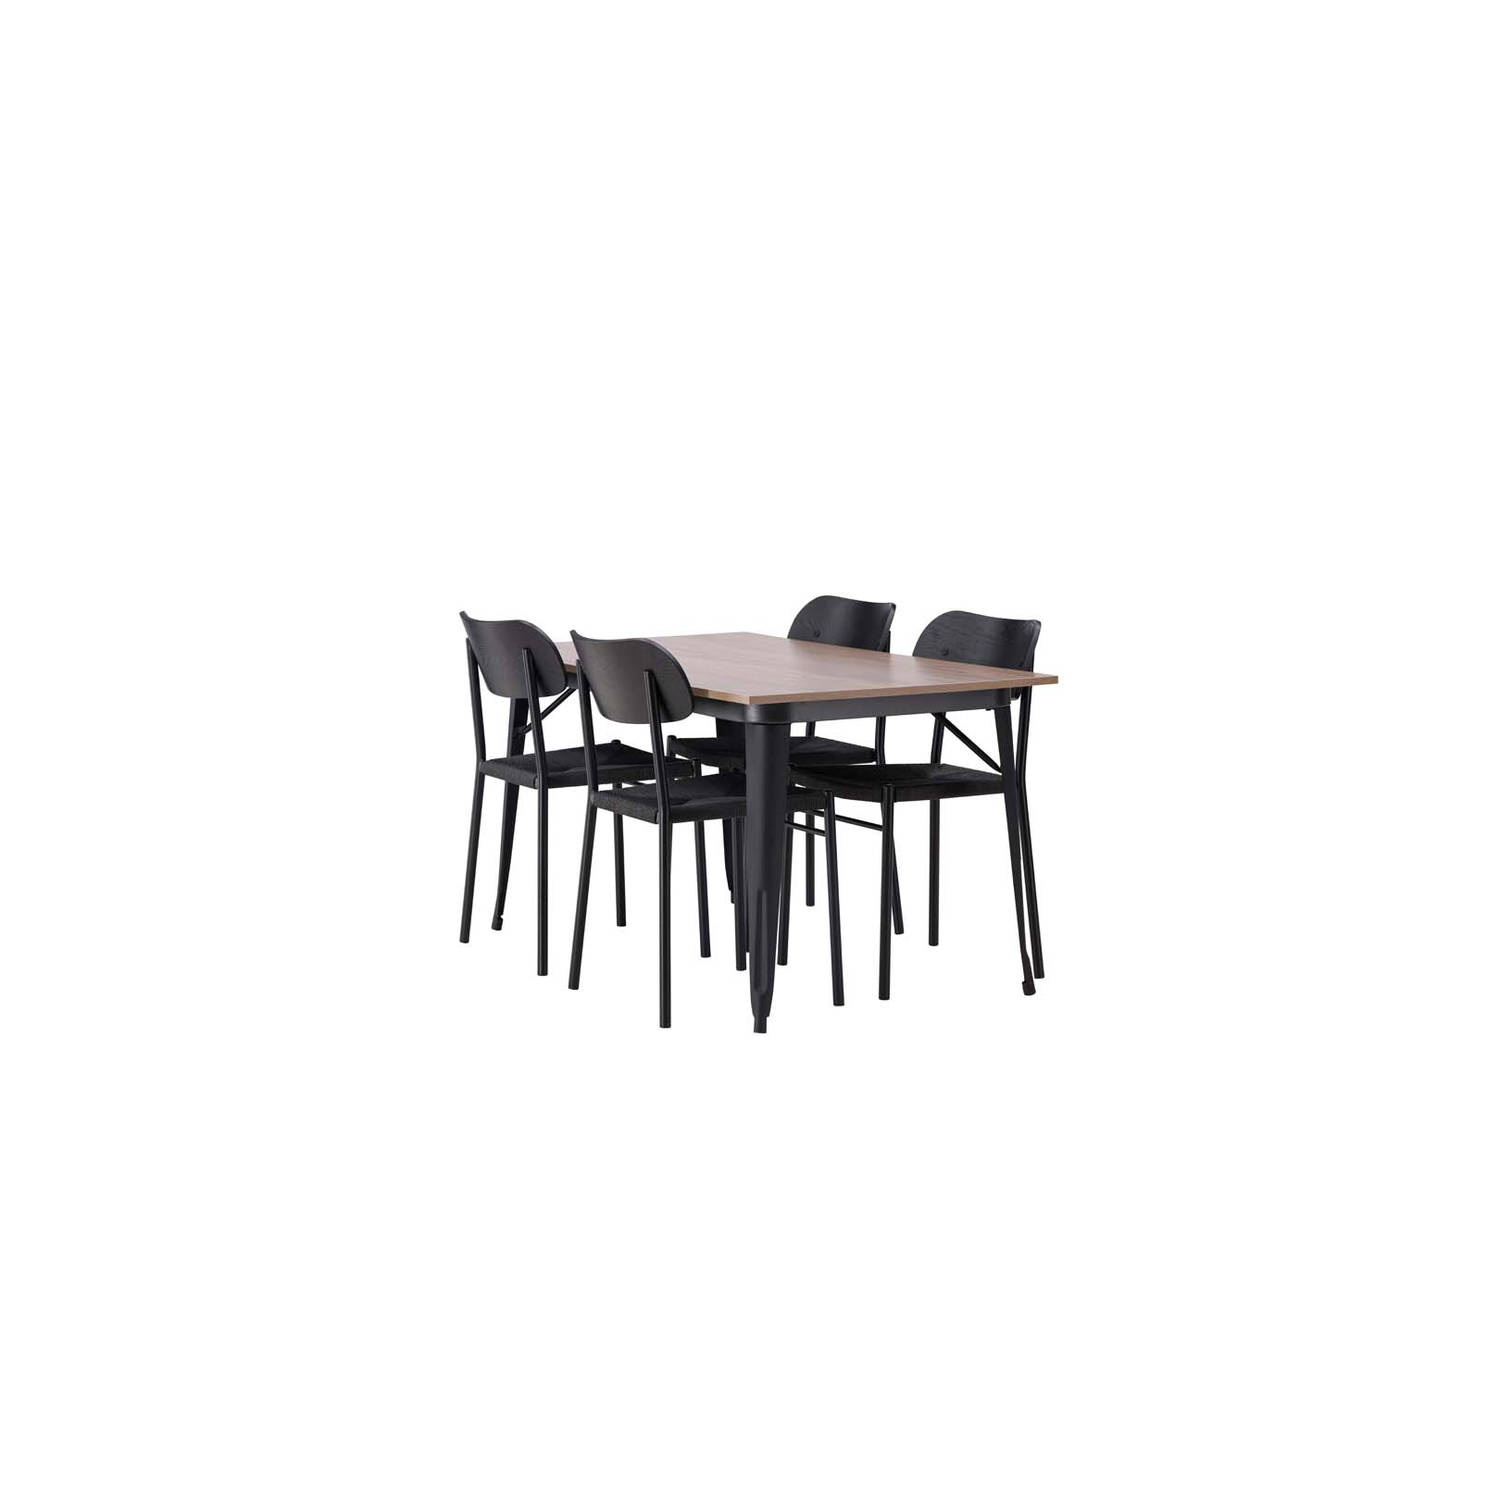 Tempe eethoek tafel okkernoot decor en 4 Polly stoelen zwart.